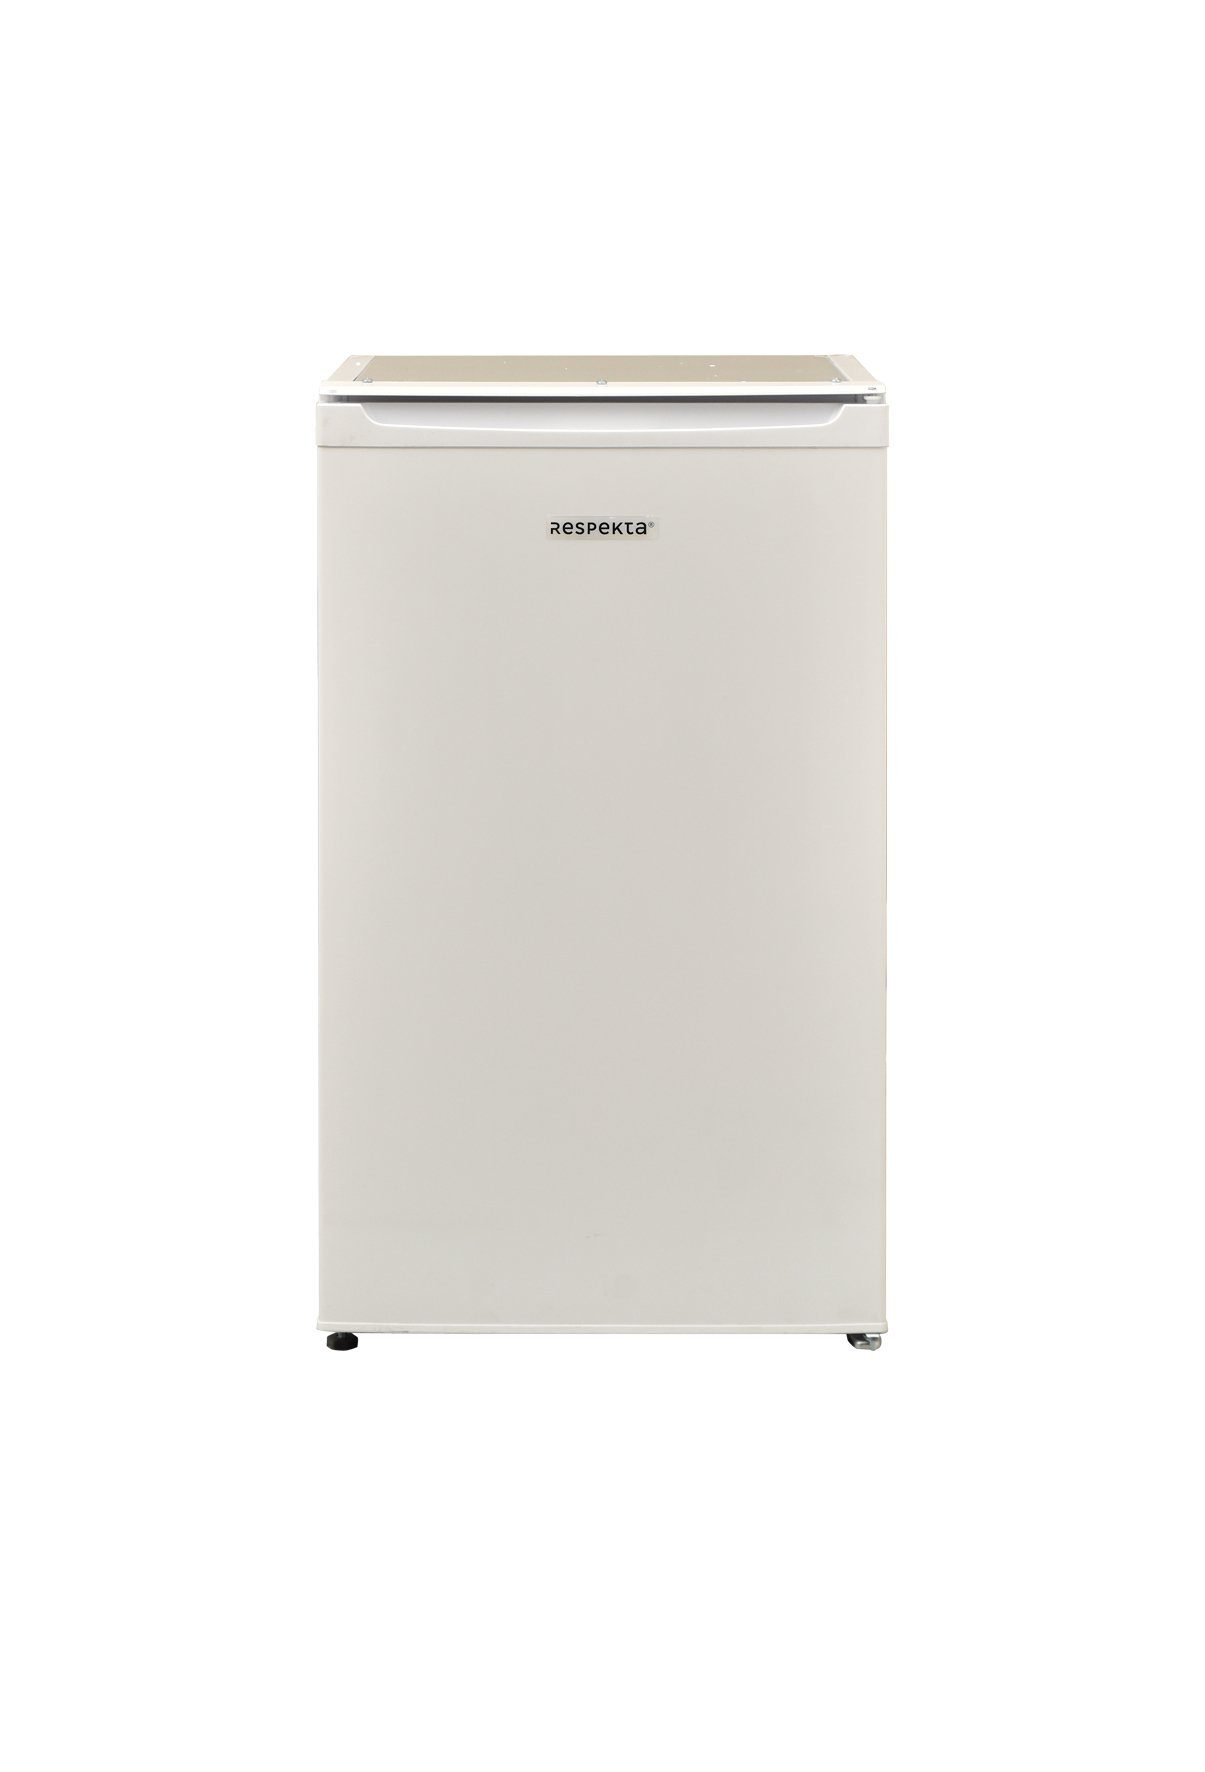 Kühlschrank mit Unterbaufähig RESPEKTA KSU50 Gefrierfach